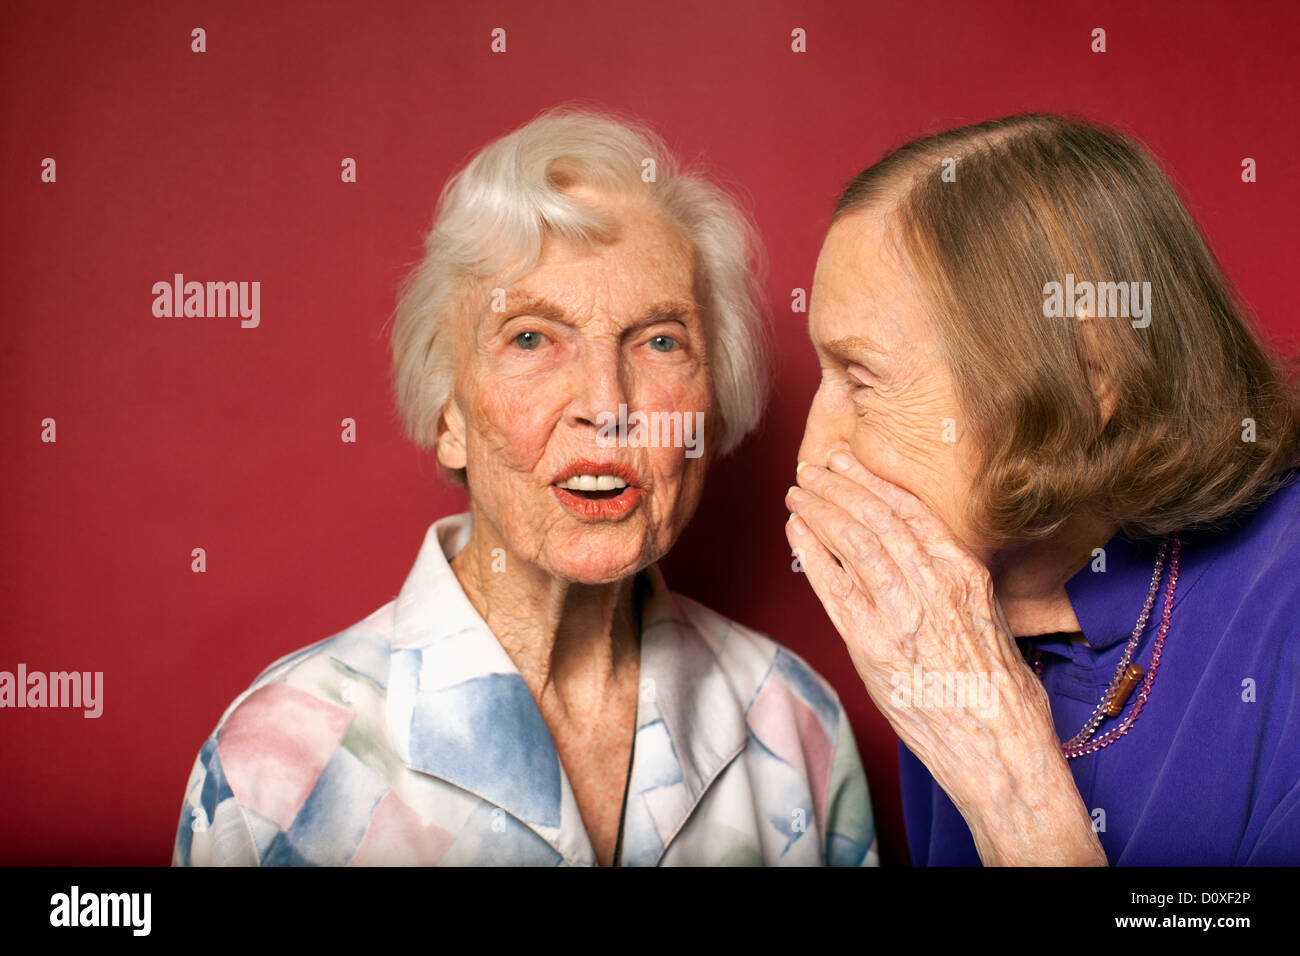 Portrait of two senior women whispering Stock Photo